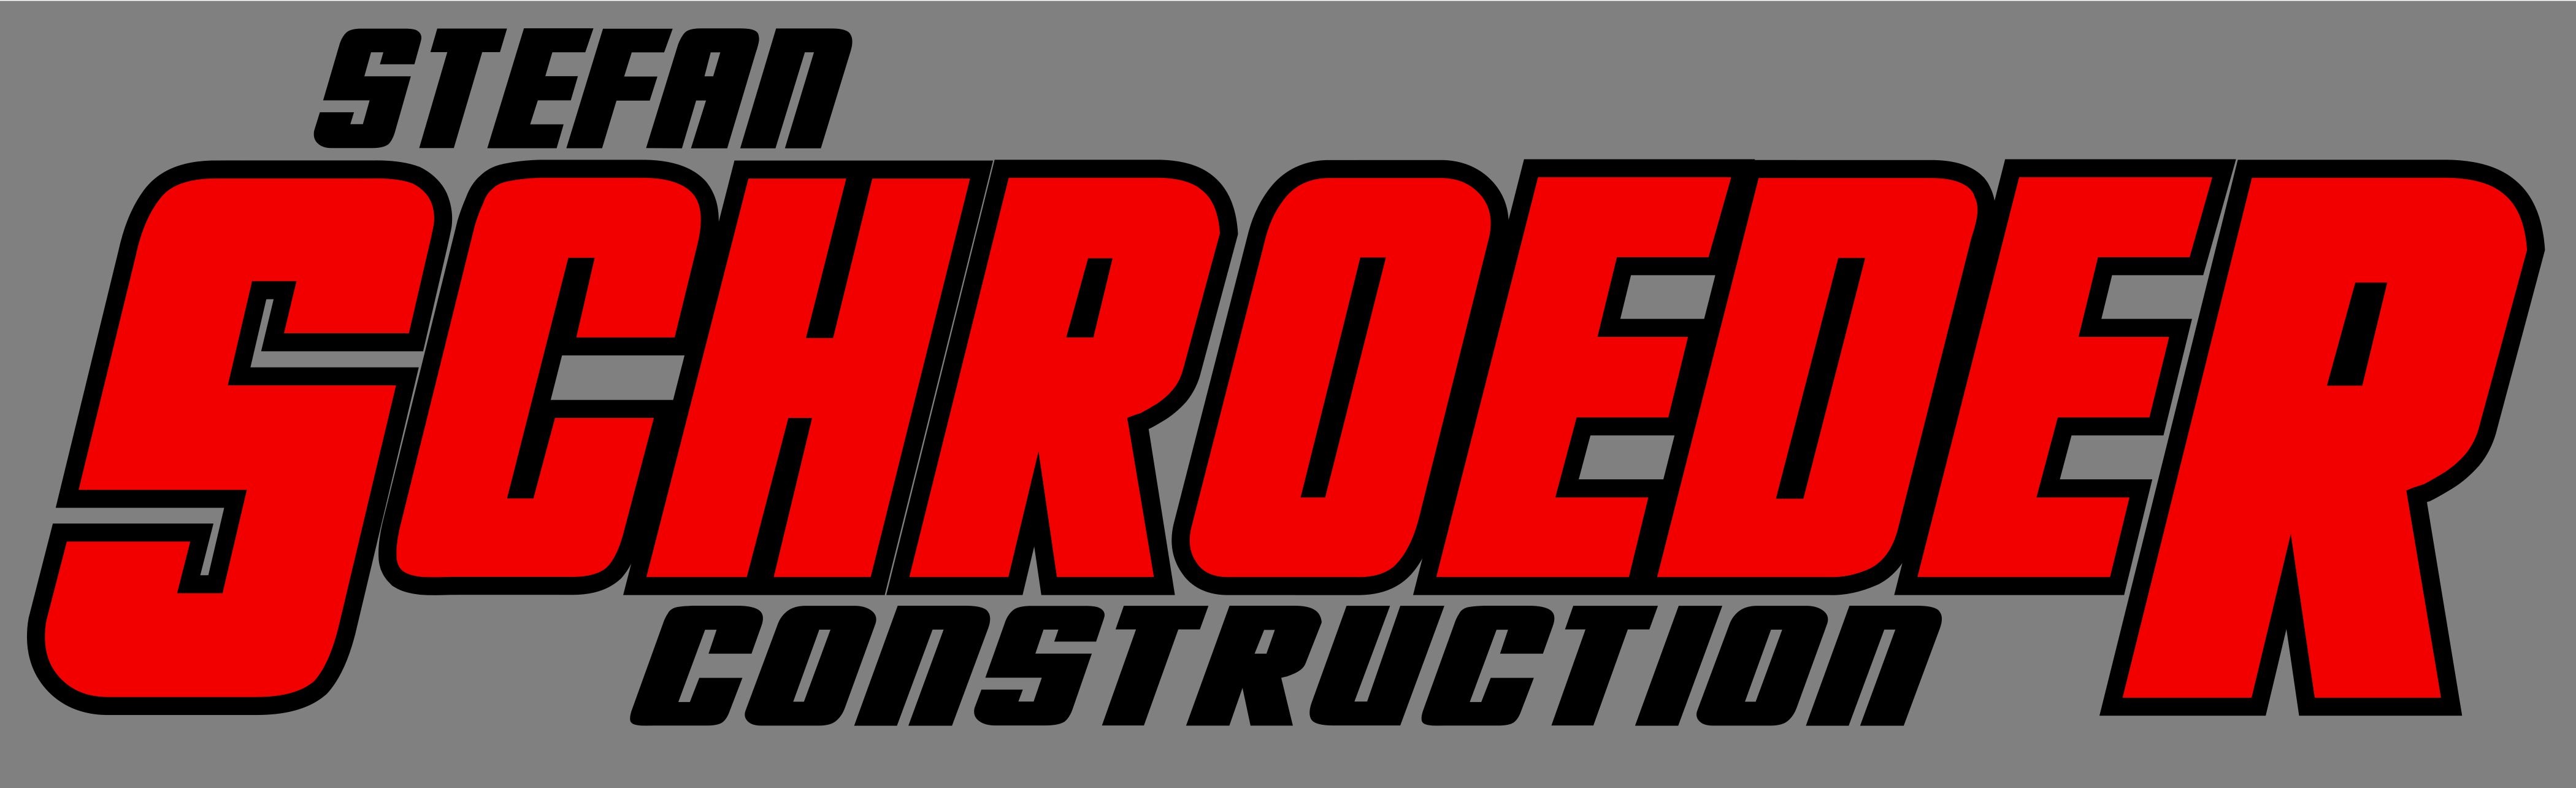 Logo for Stefan Schroeder Construction